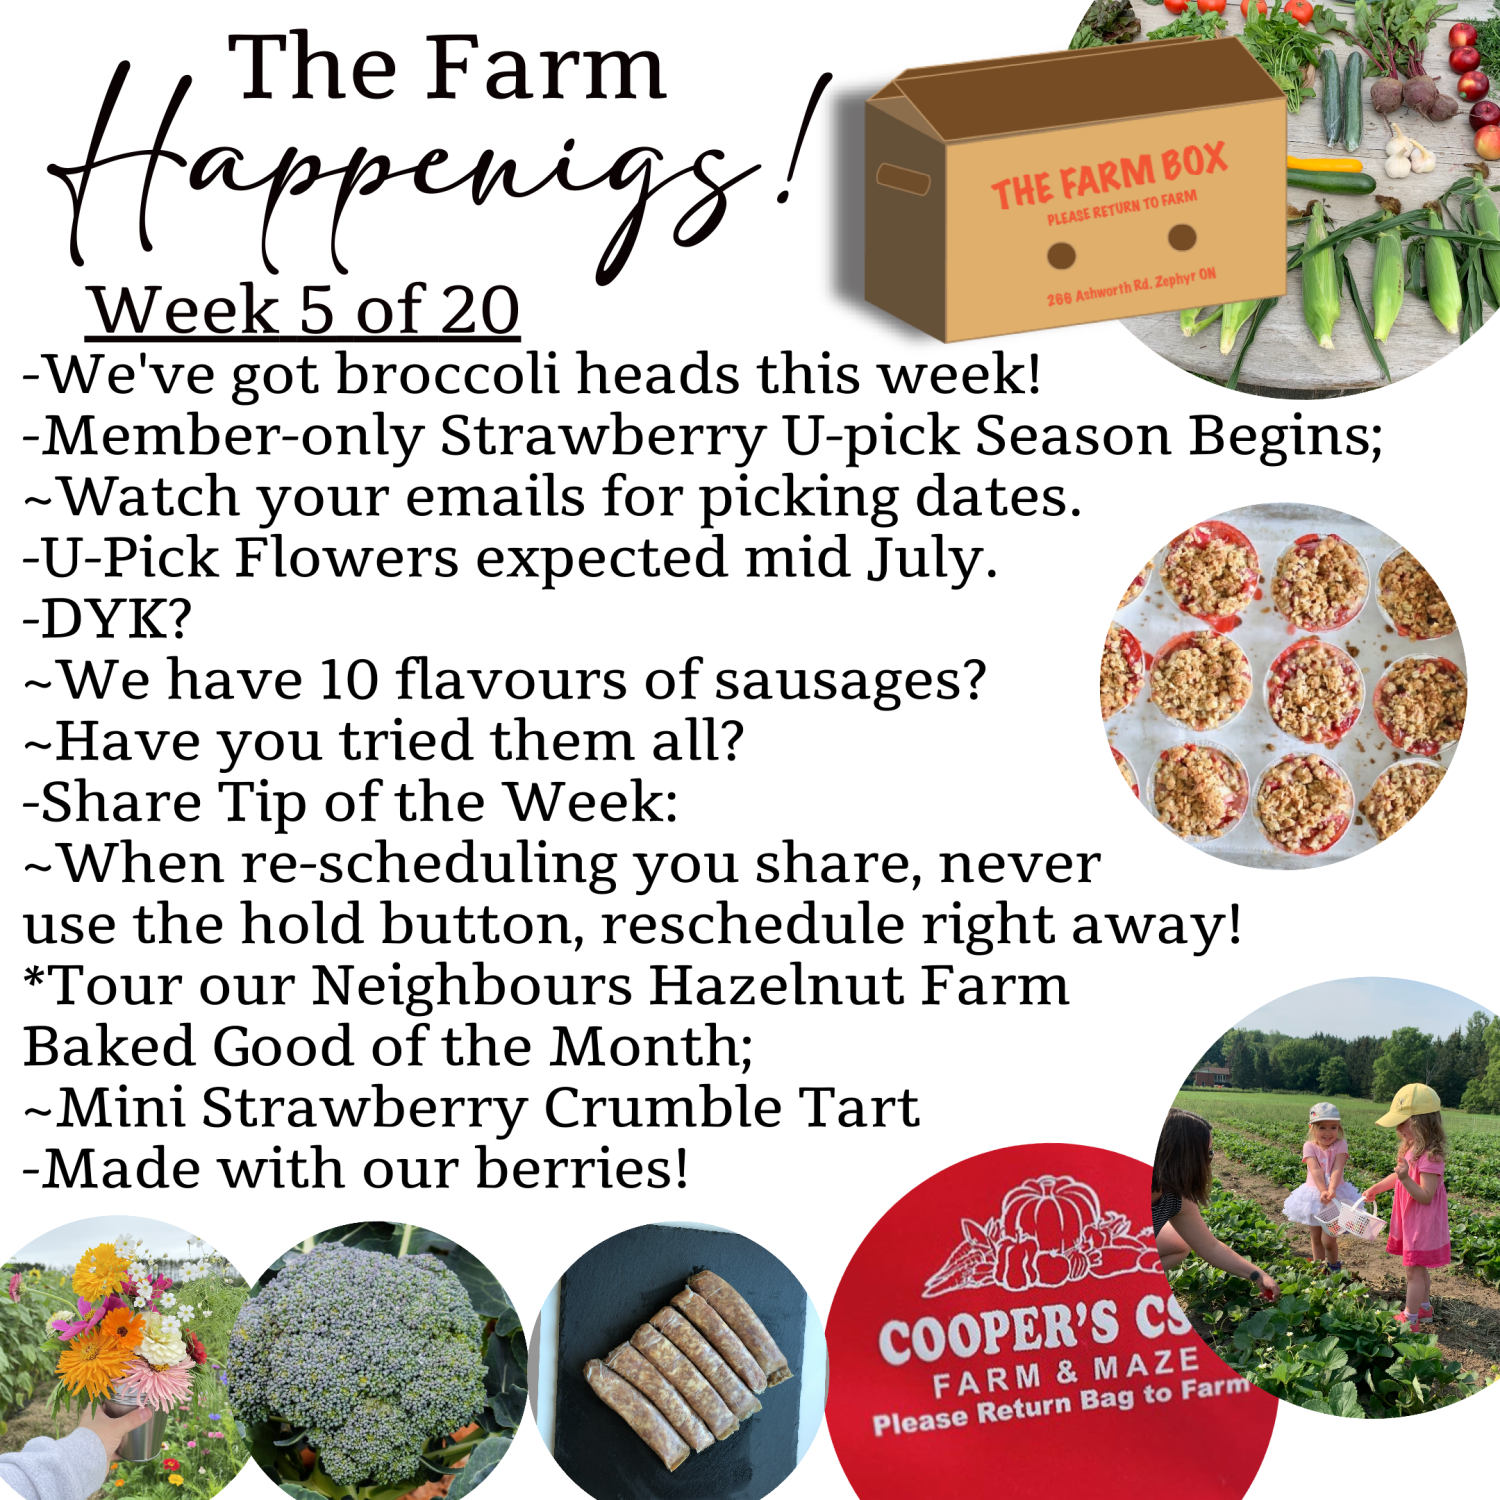 Next Happening: "The Farm Box"-Coopers CSA Farm Farm Happenings Week 5 of 20